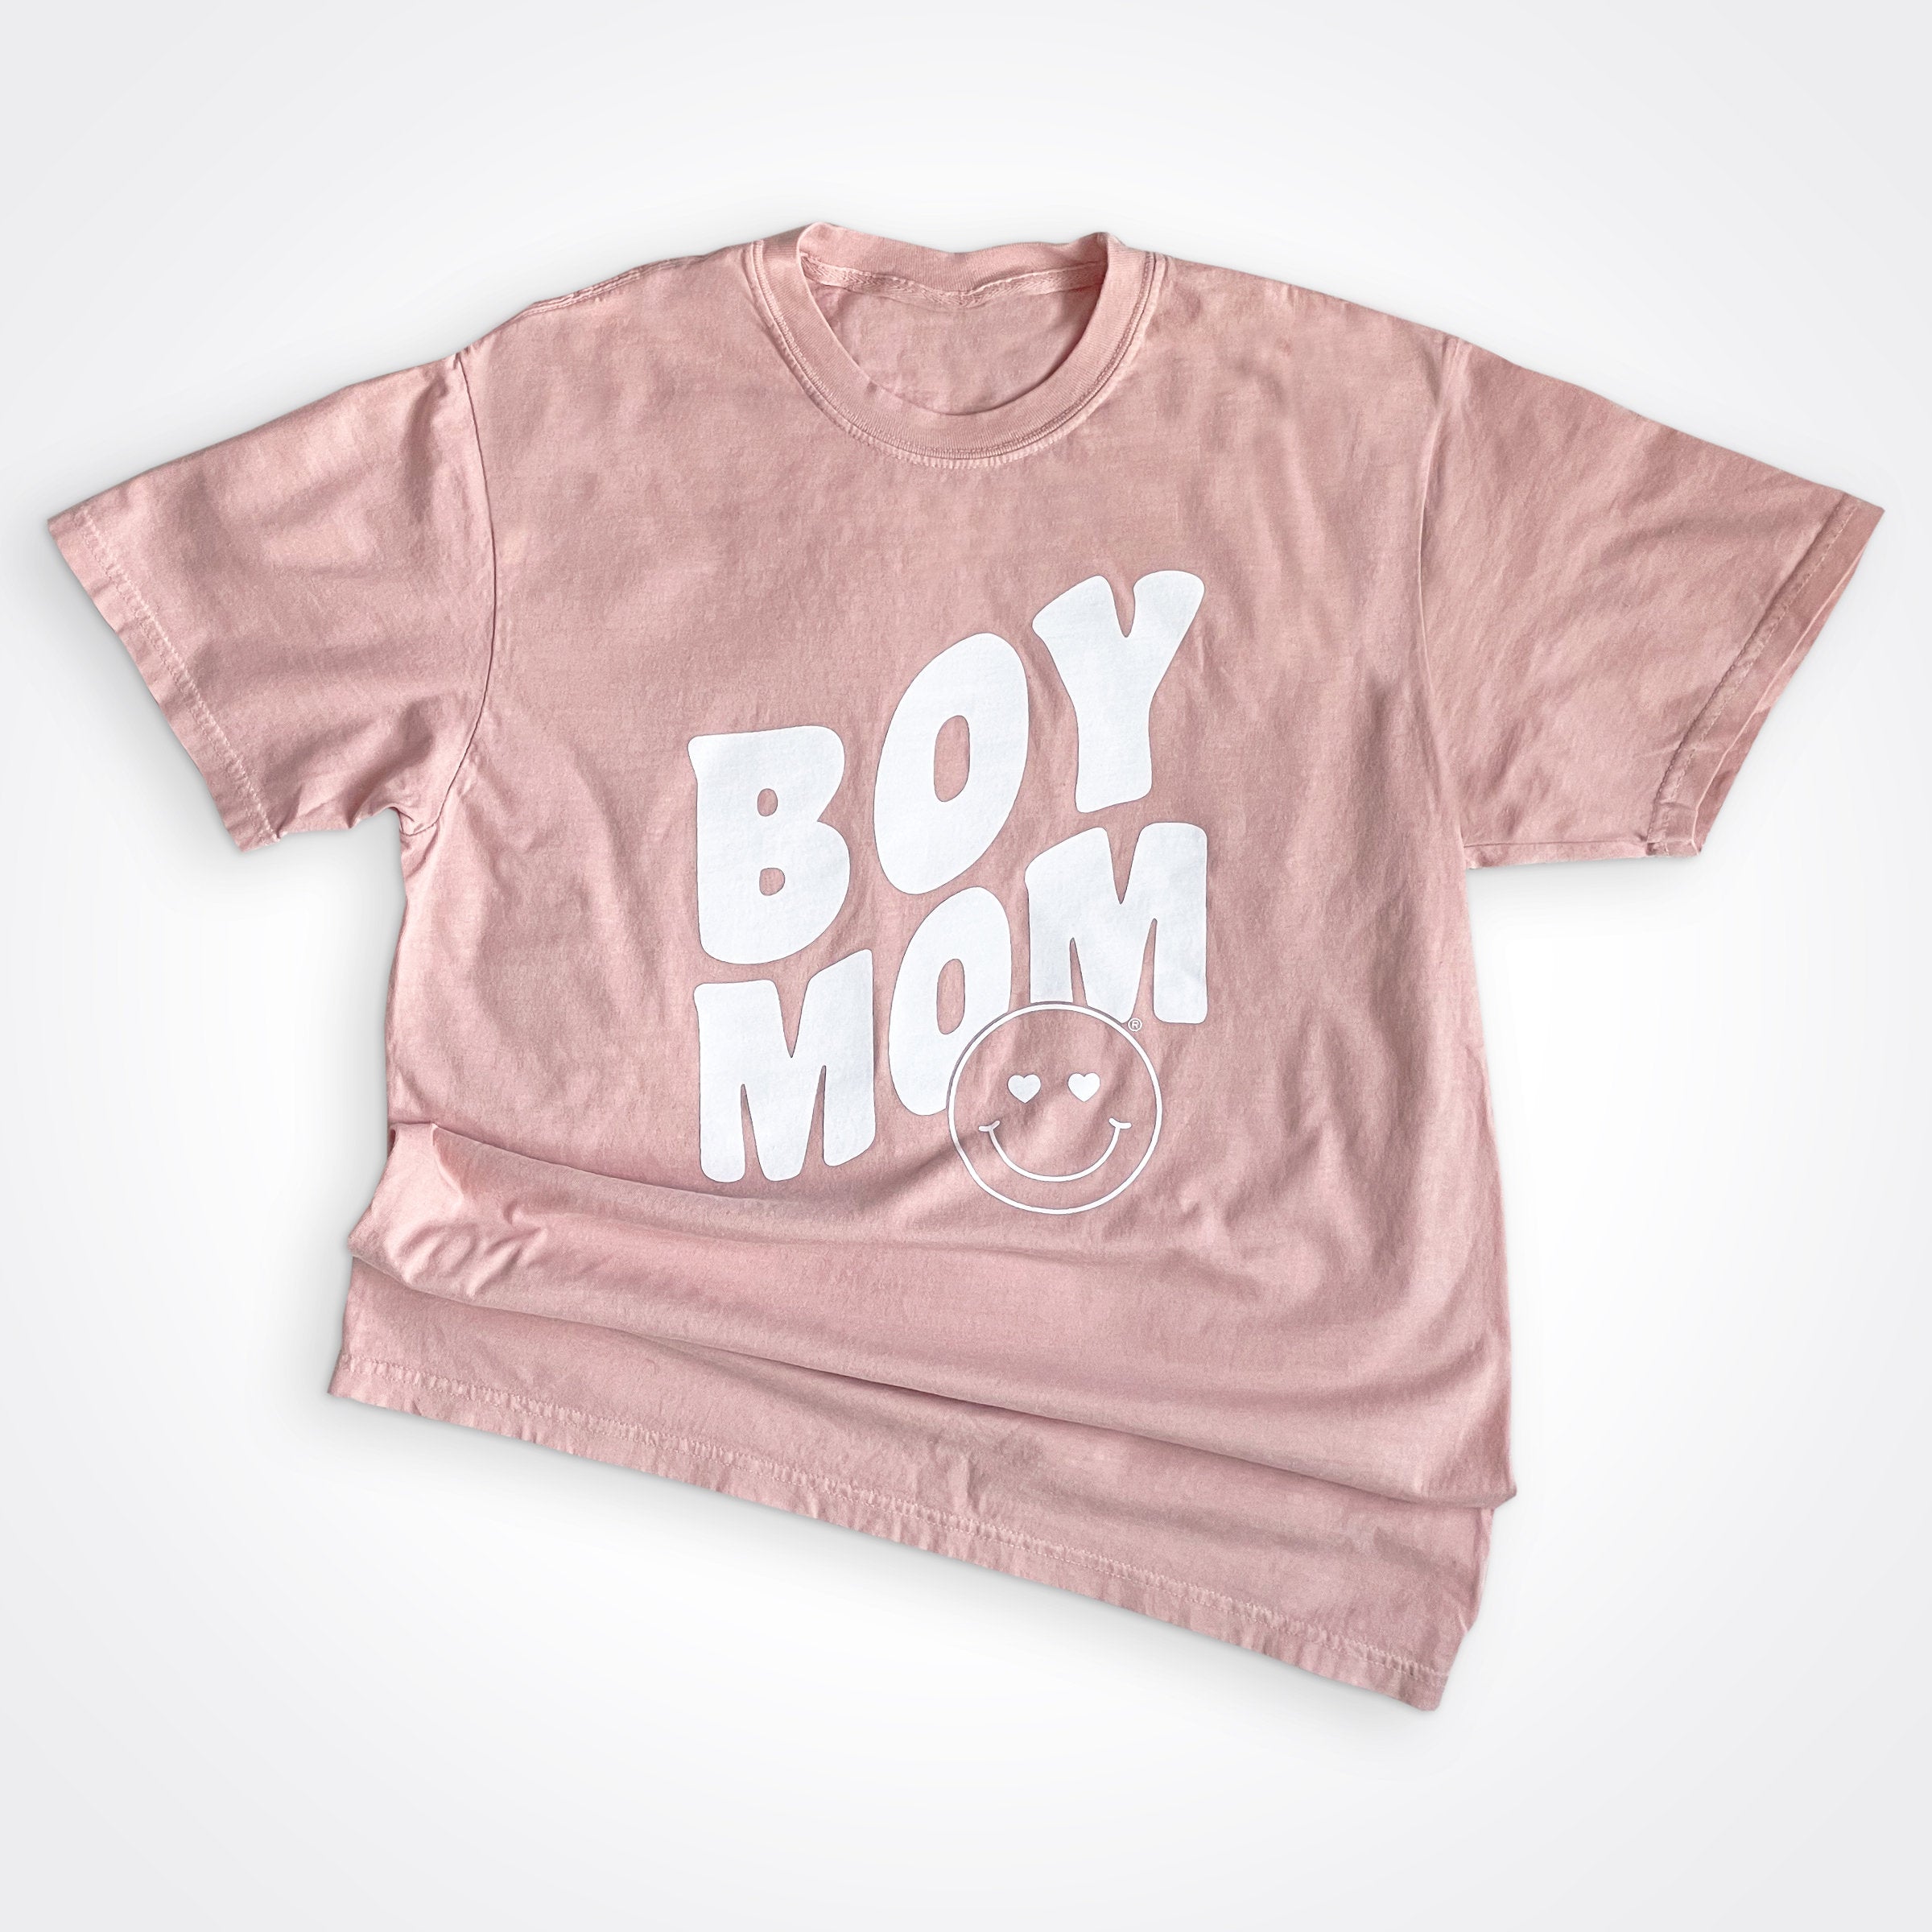 Boymom® Heart Eyes Shirt in Peachy Color